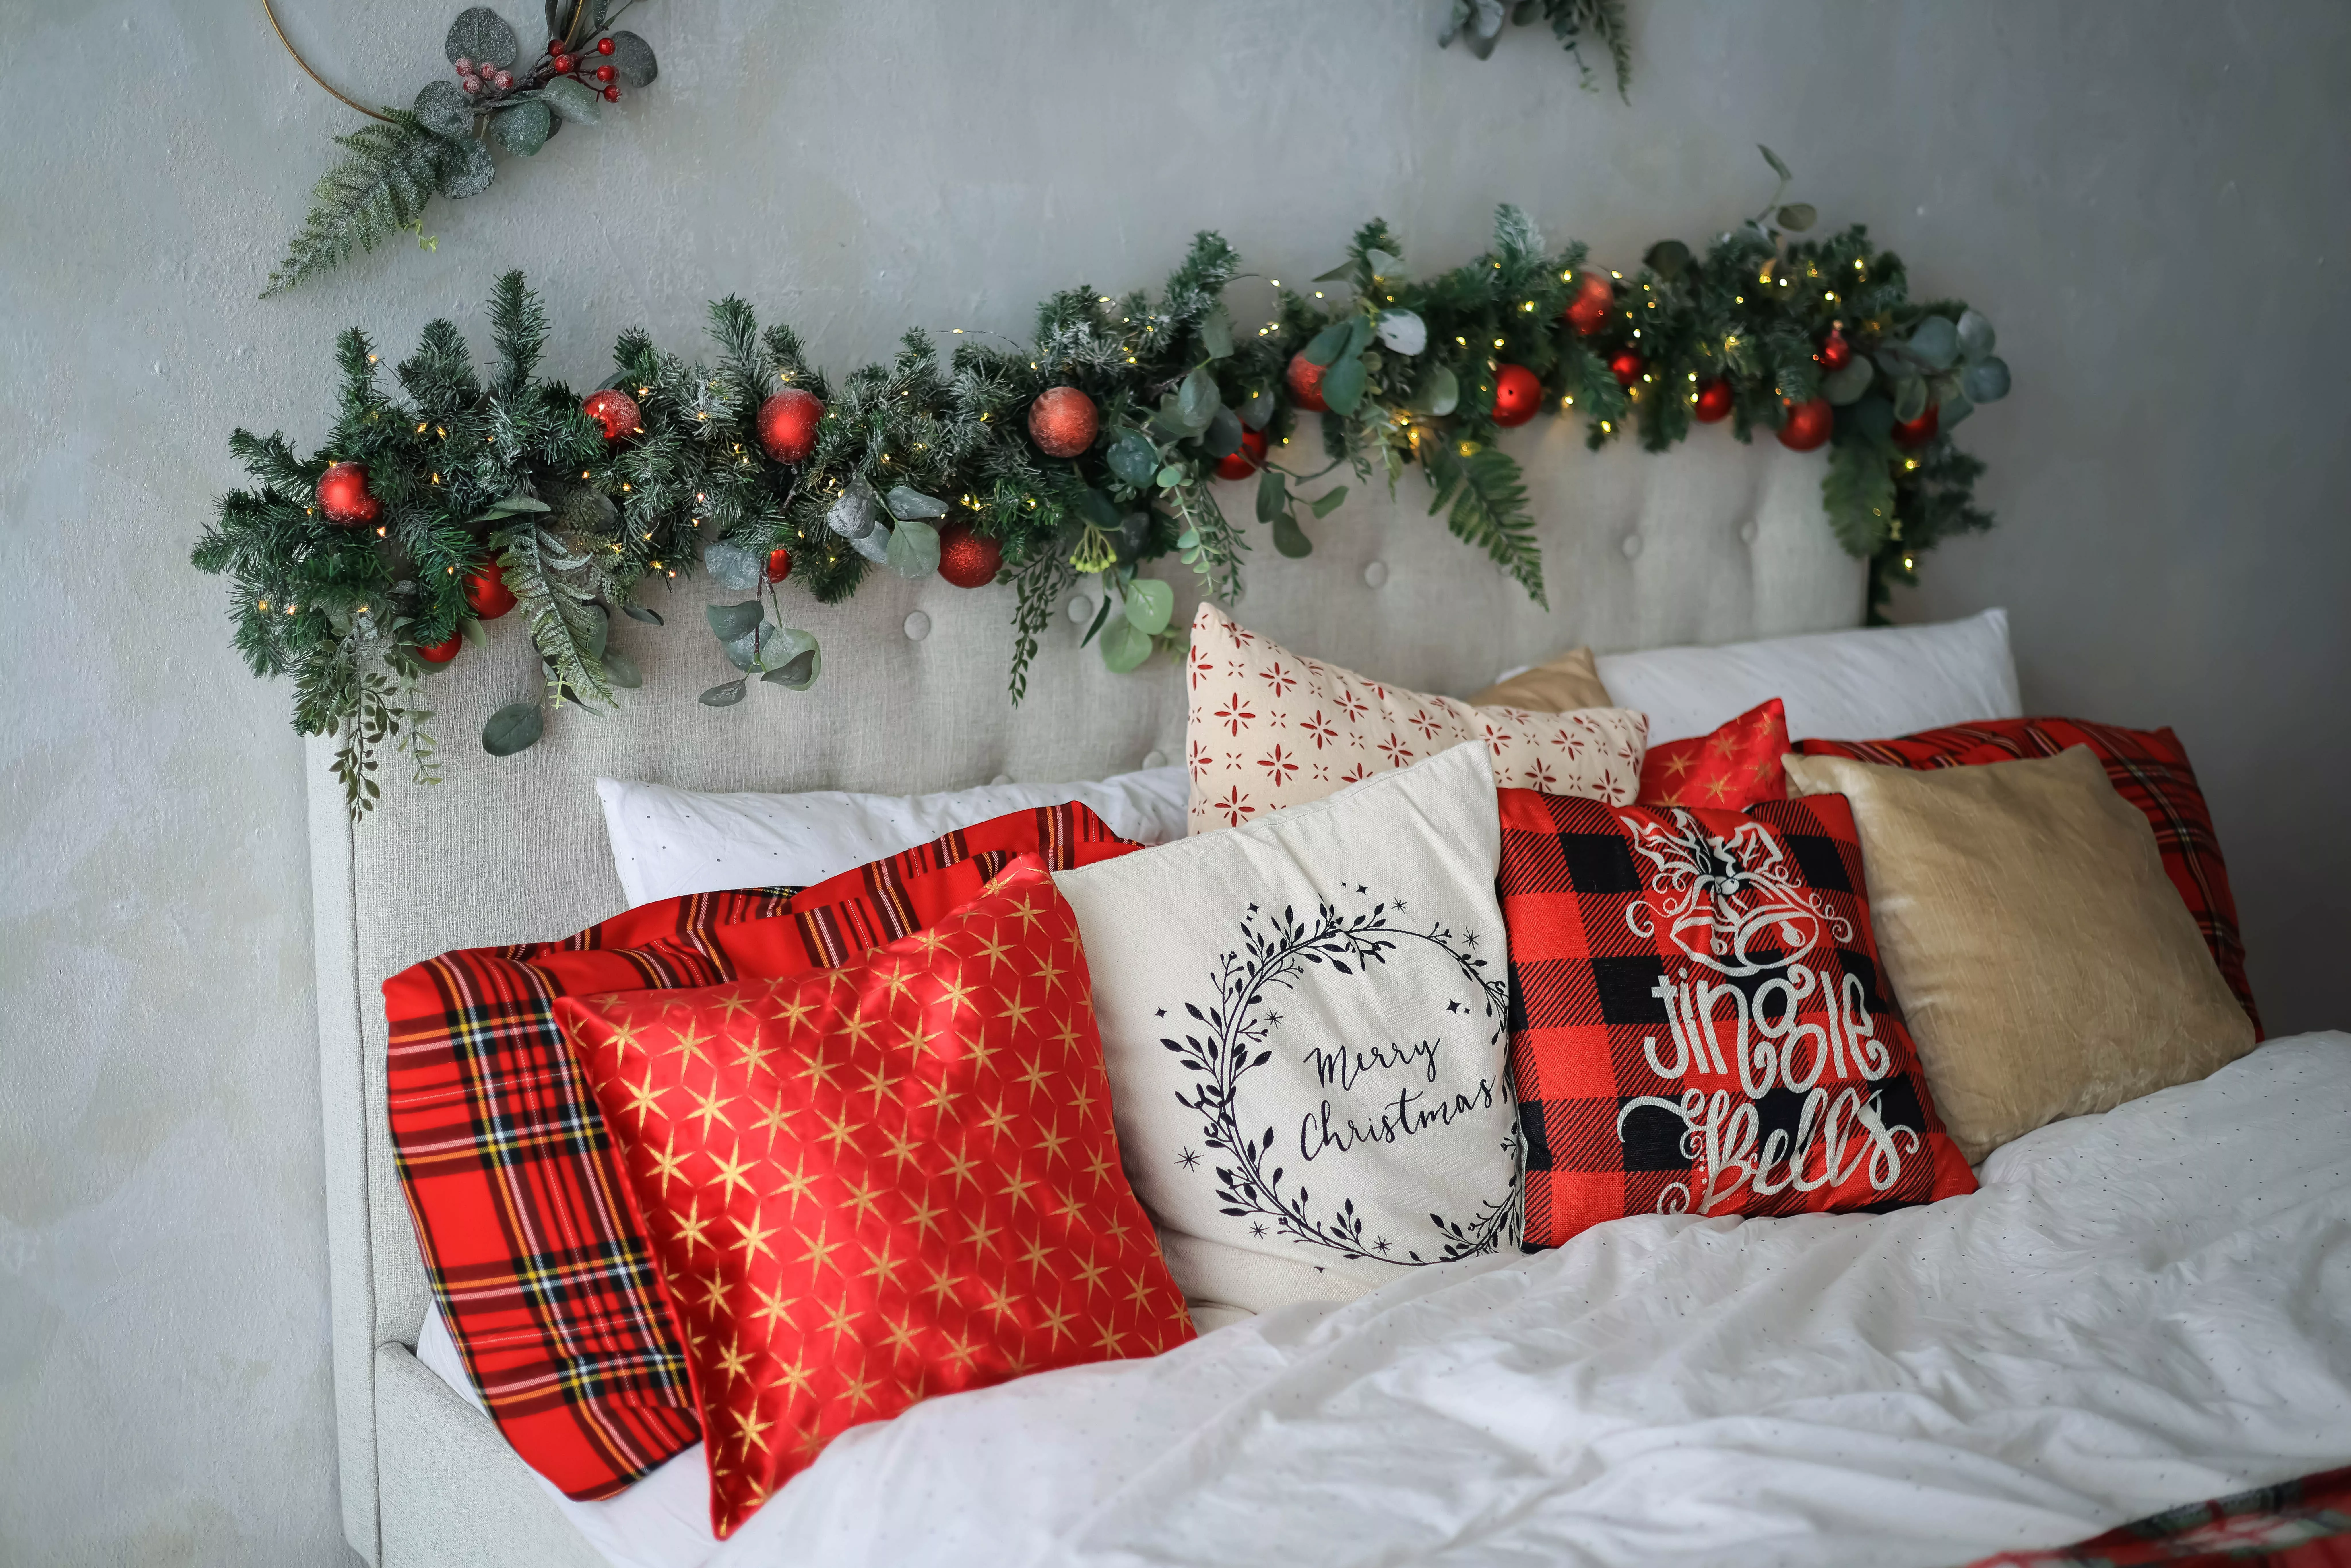 DIY Christmas Pillow Covers